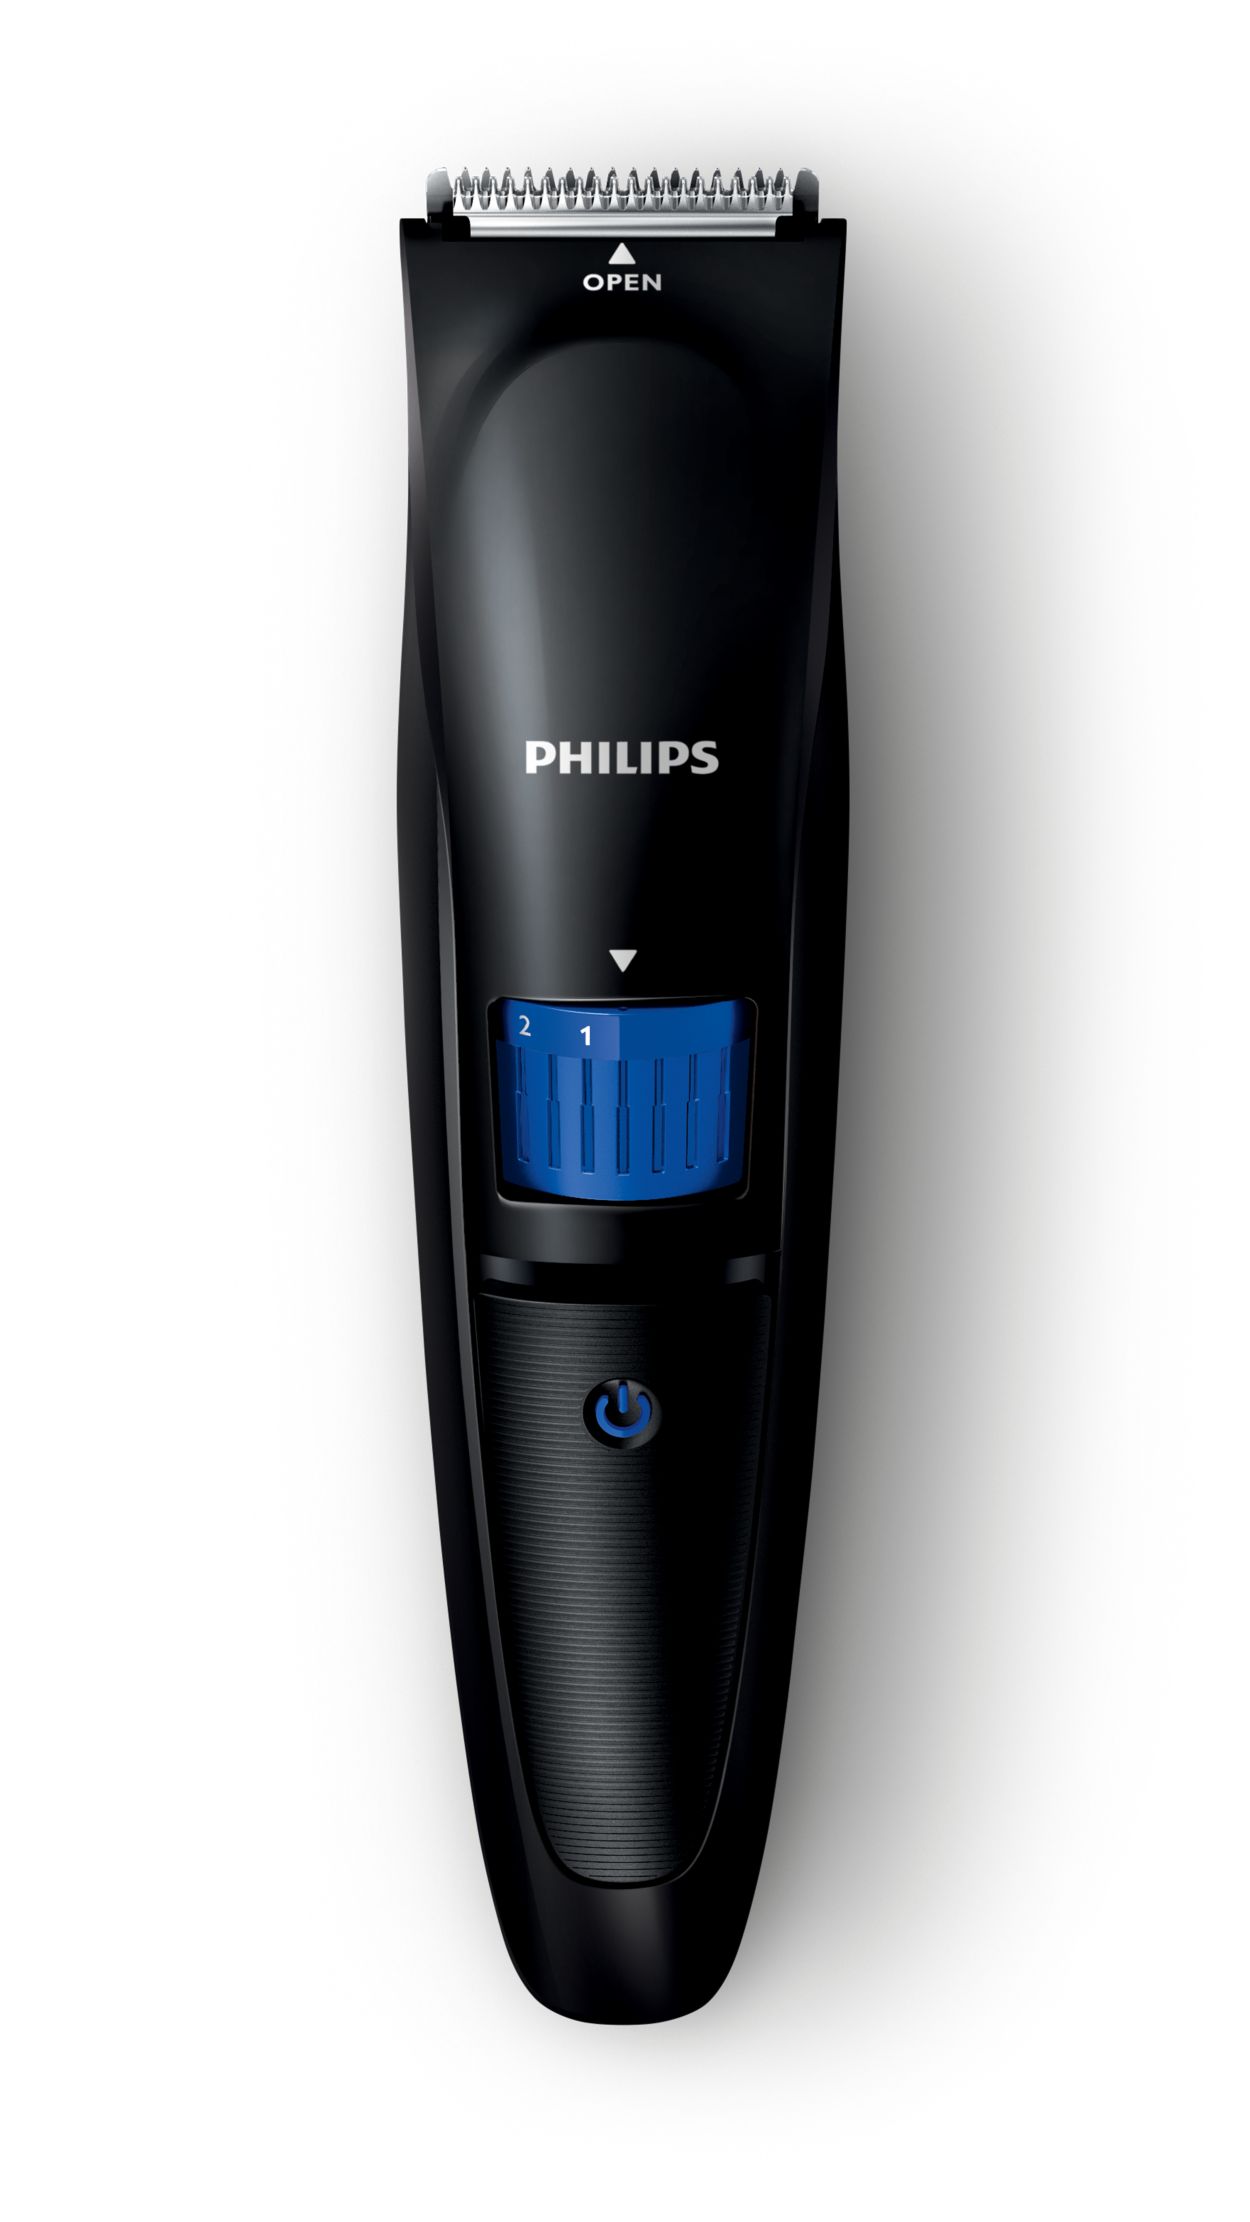 Philips nl9206ad купить. Philips nl9206ad. Филипс nl9206ad-4. Philips nl9206ad-4 Drachten бритва. Philips триммер бритва 2015.